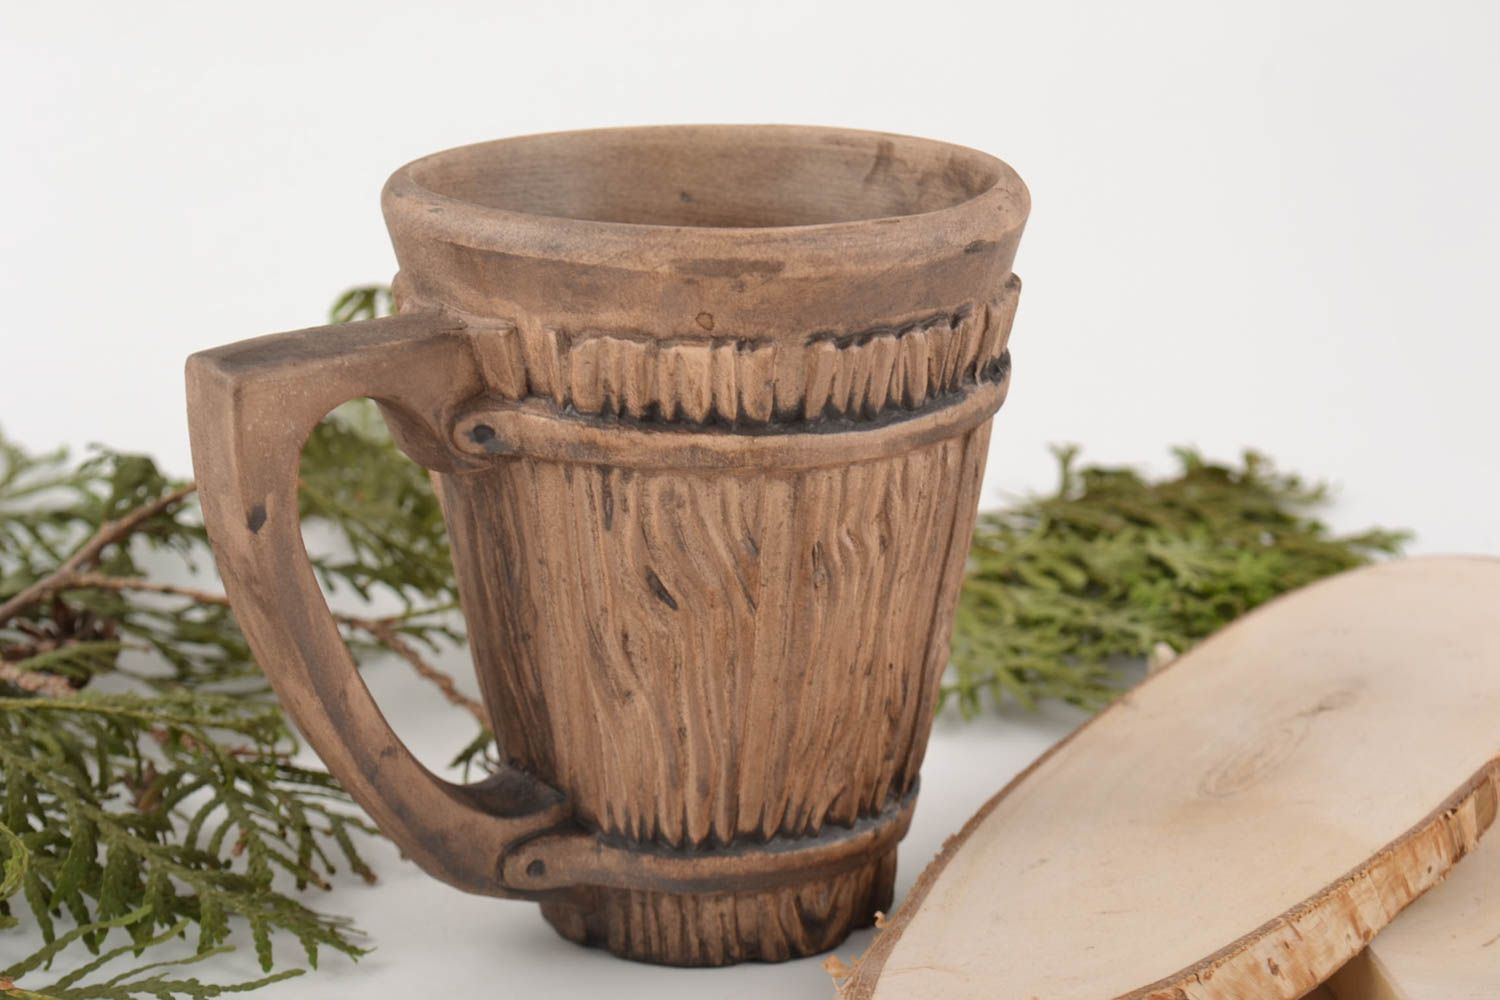 11 oz clay tea mug with handle in fake wood style 0,75 lb photo 1